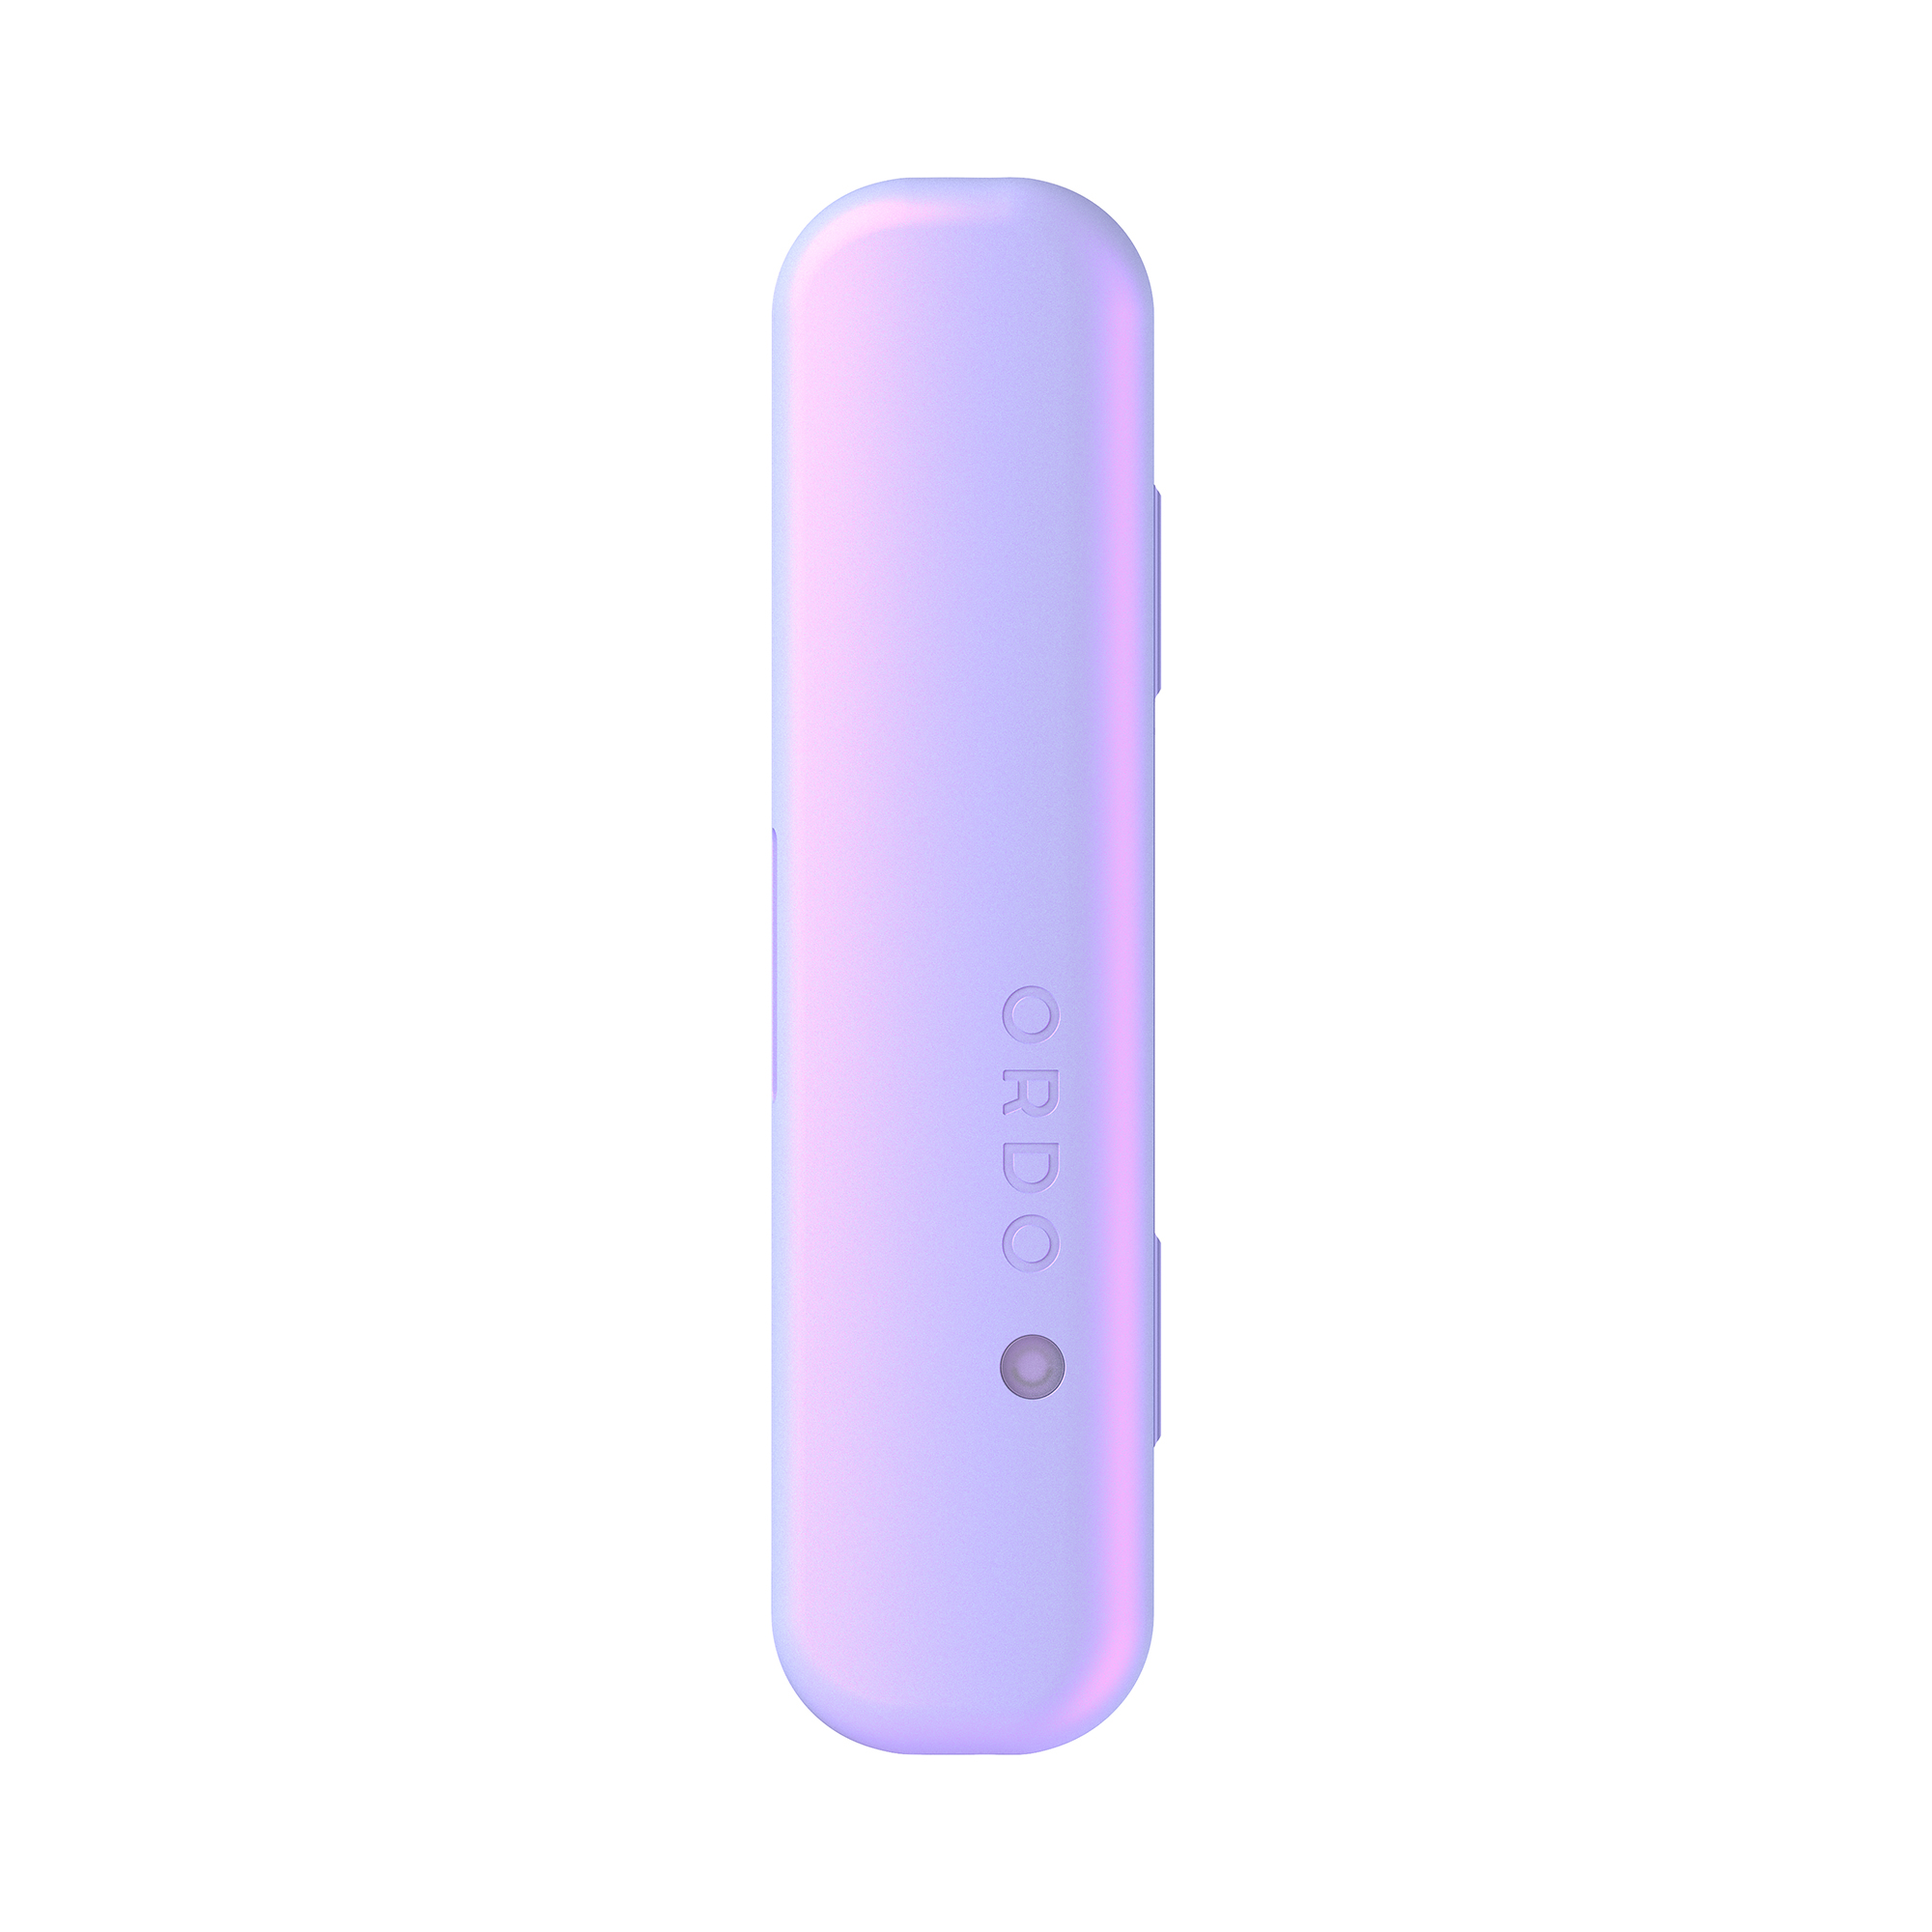 Зарядное устройство, футляр ORDO Sonic+ Charging Travel Case Pearl Violet футляр росомз